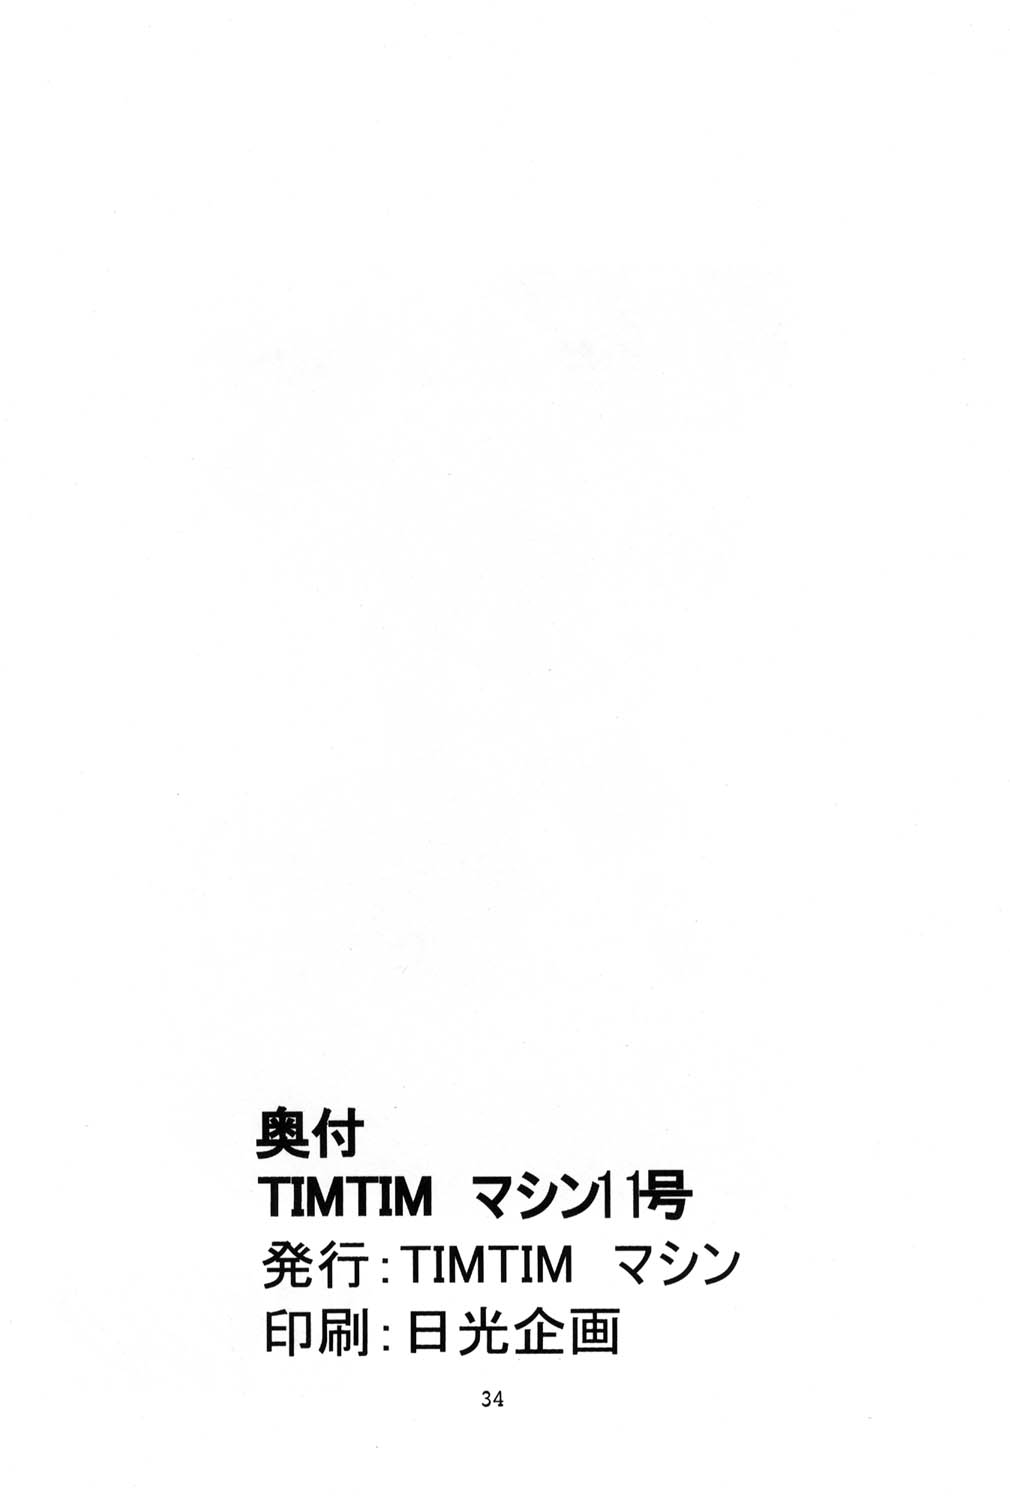 TIMTIM 11 